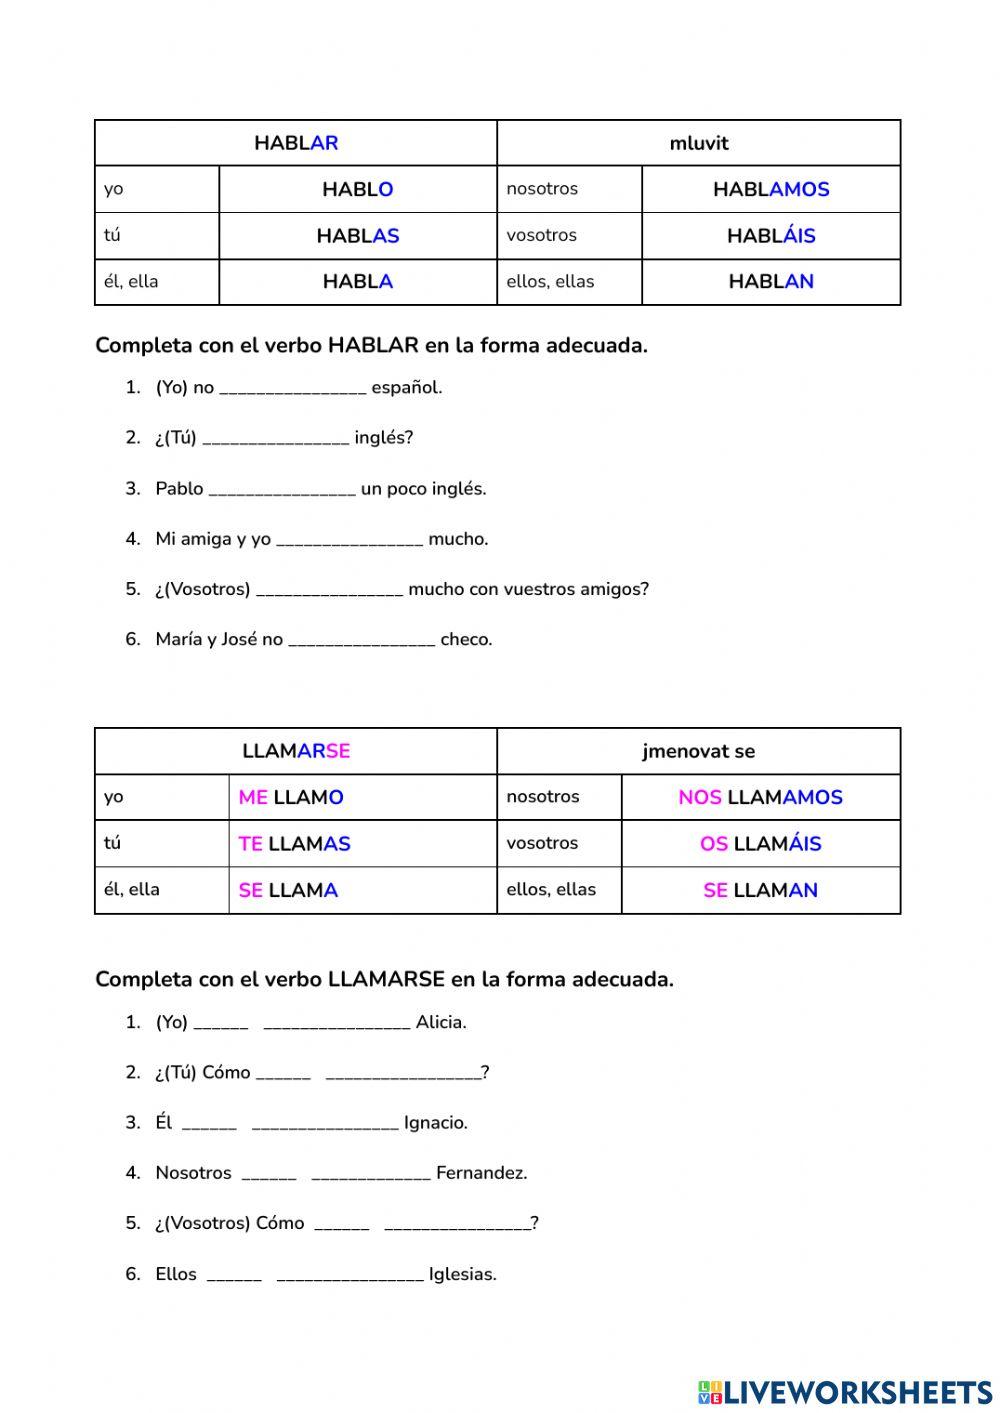 HABLAR, LLAMARSE - conjugación worksheet | Live Worksheets